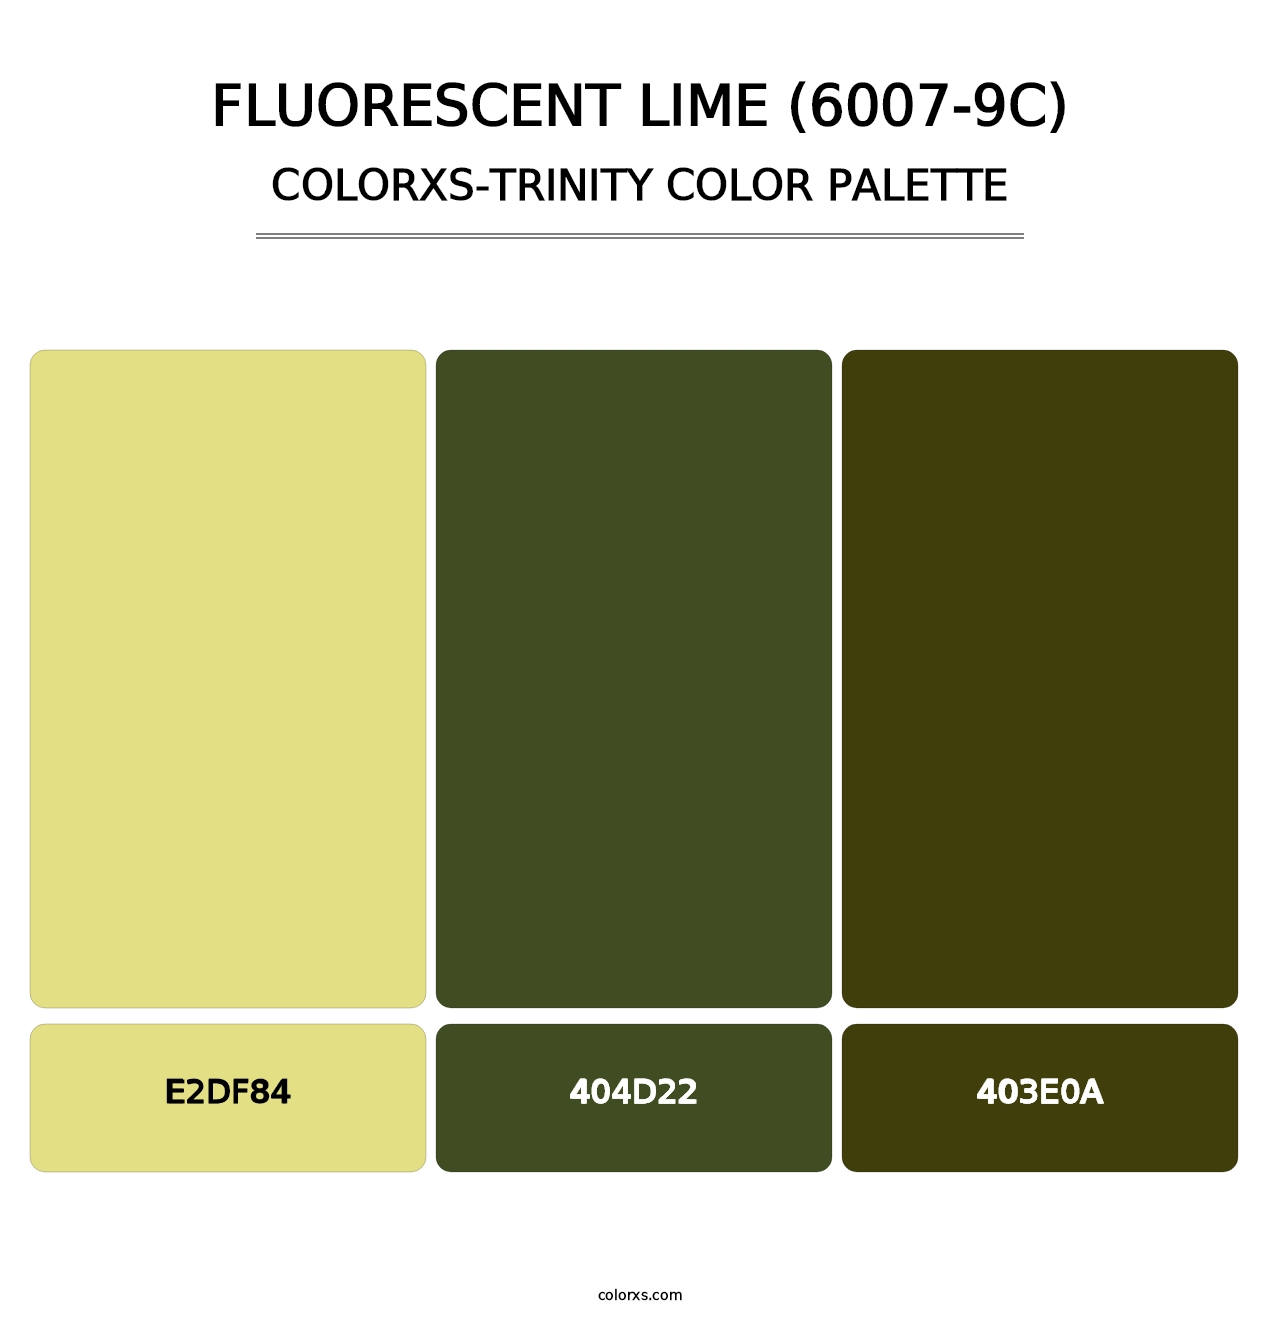 Fluorescent Lime (6007-9C) - Colorxs Trinity Palette